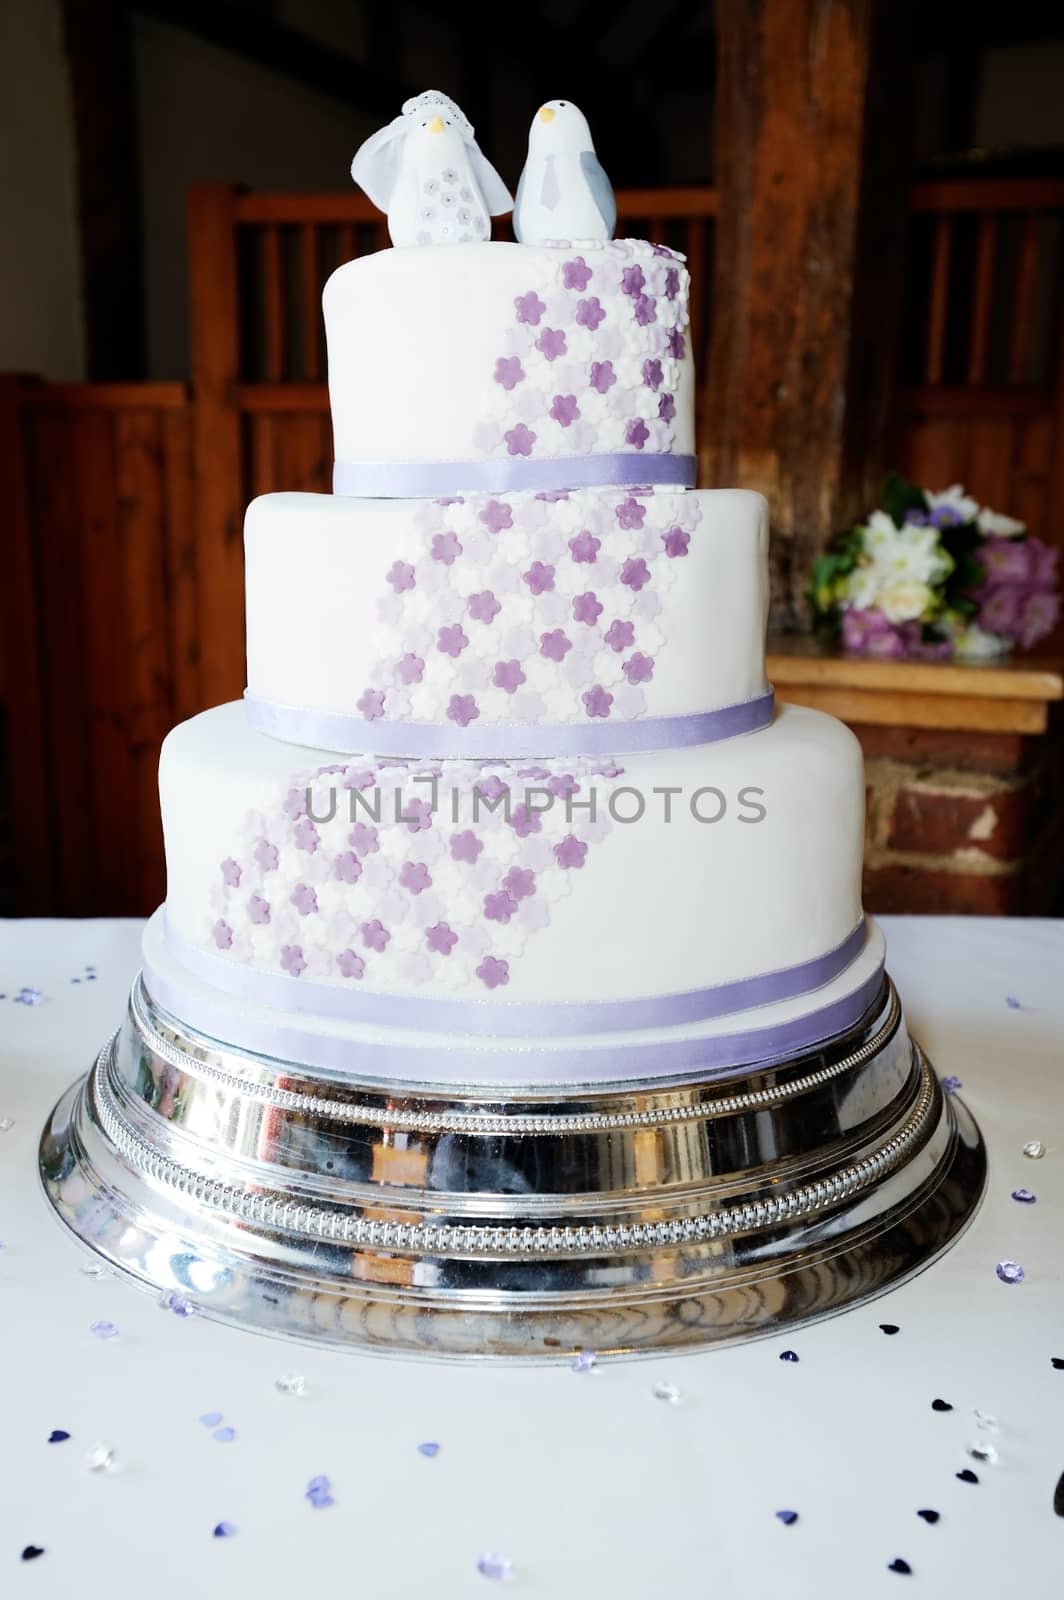 Wedding cake by kmwphotography